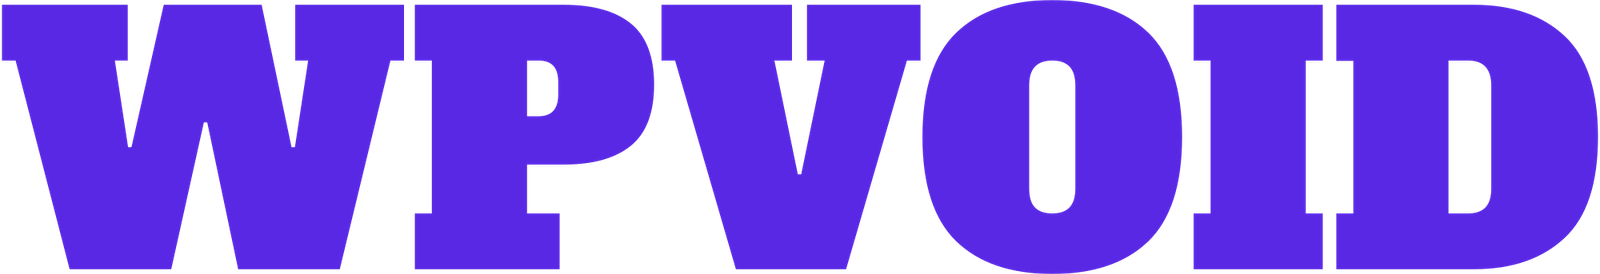 wpvoid logo color